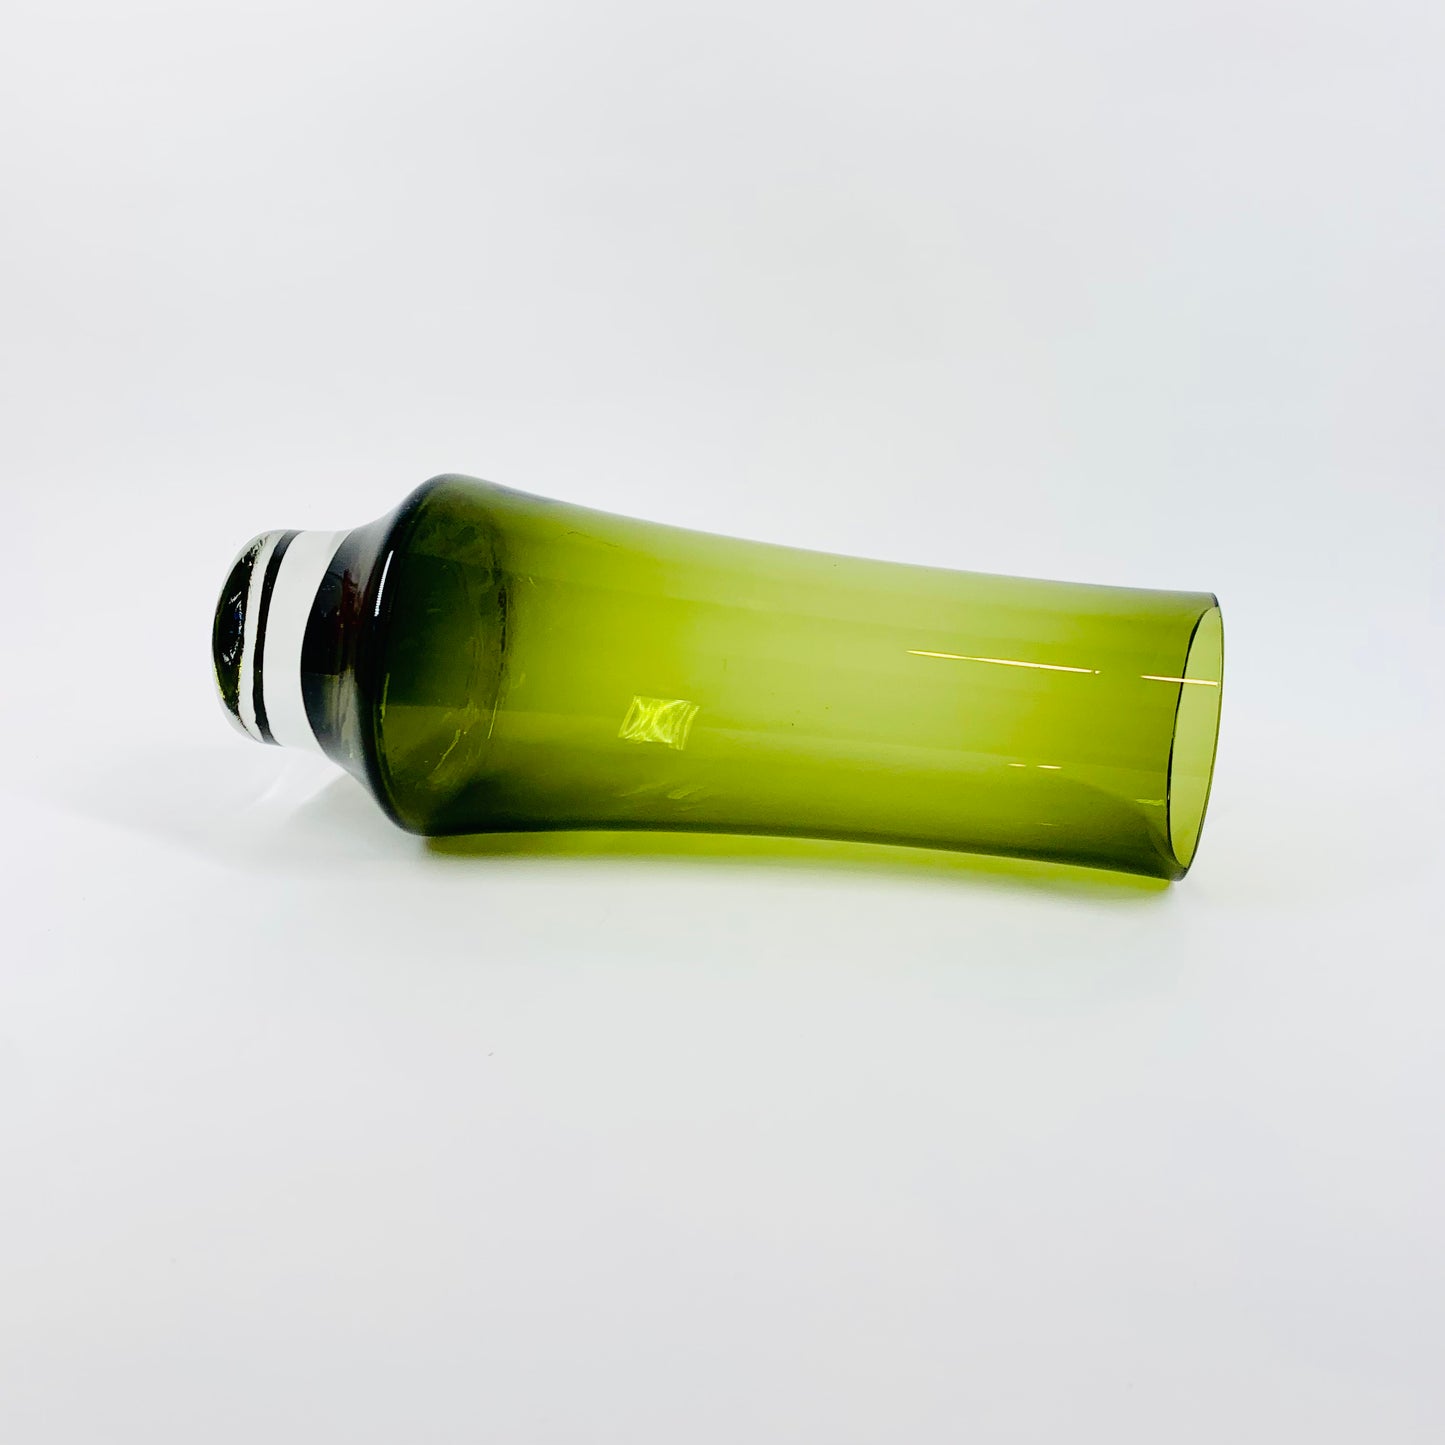 Rare Space Age Riihimaki green glass vase by Tamara Aladin